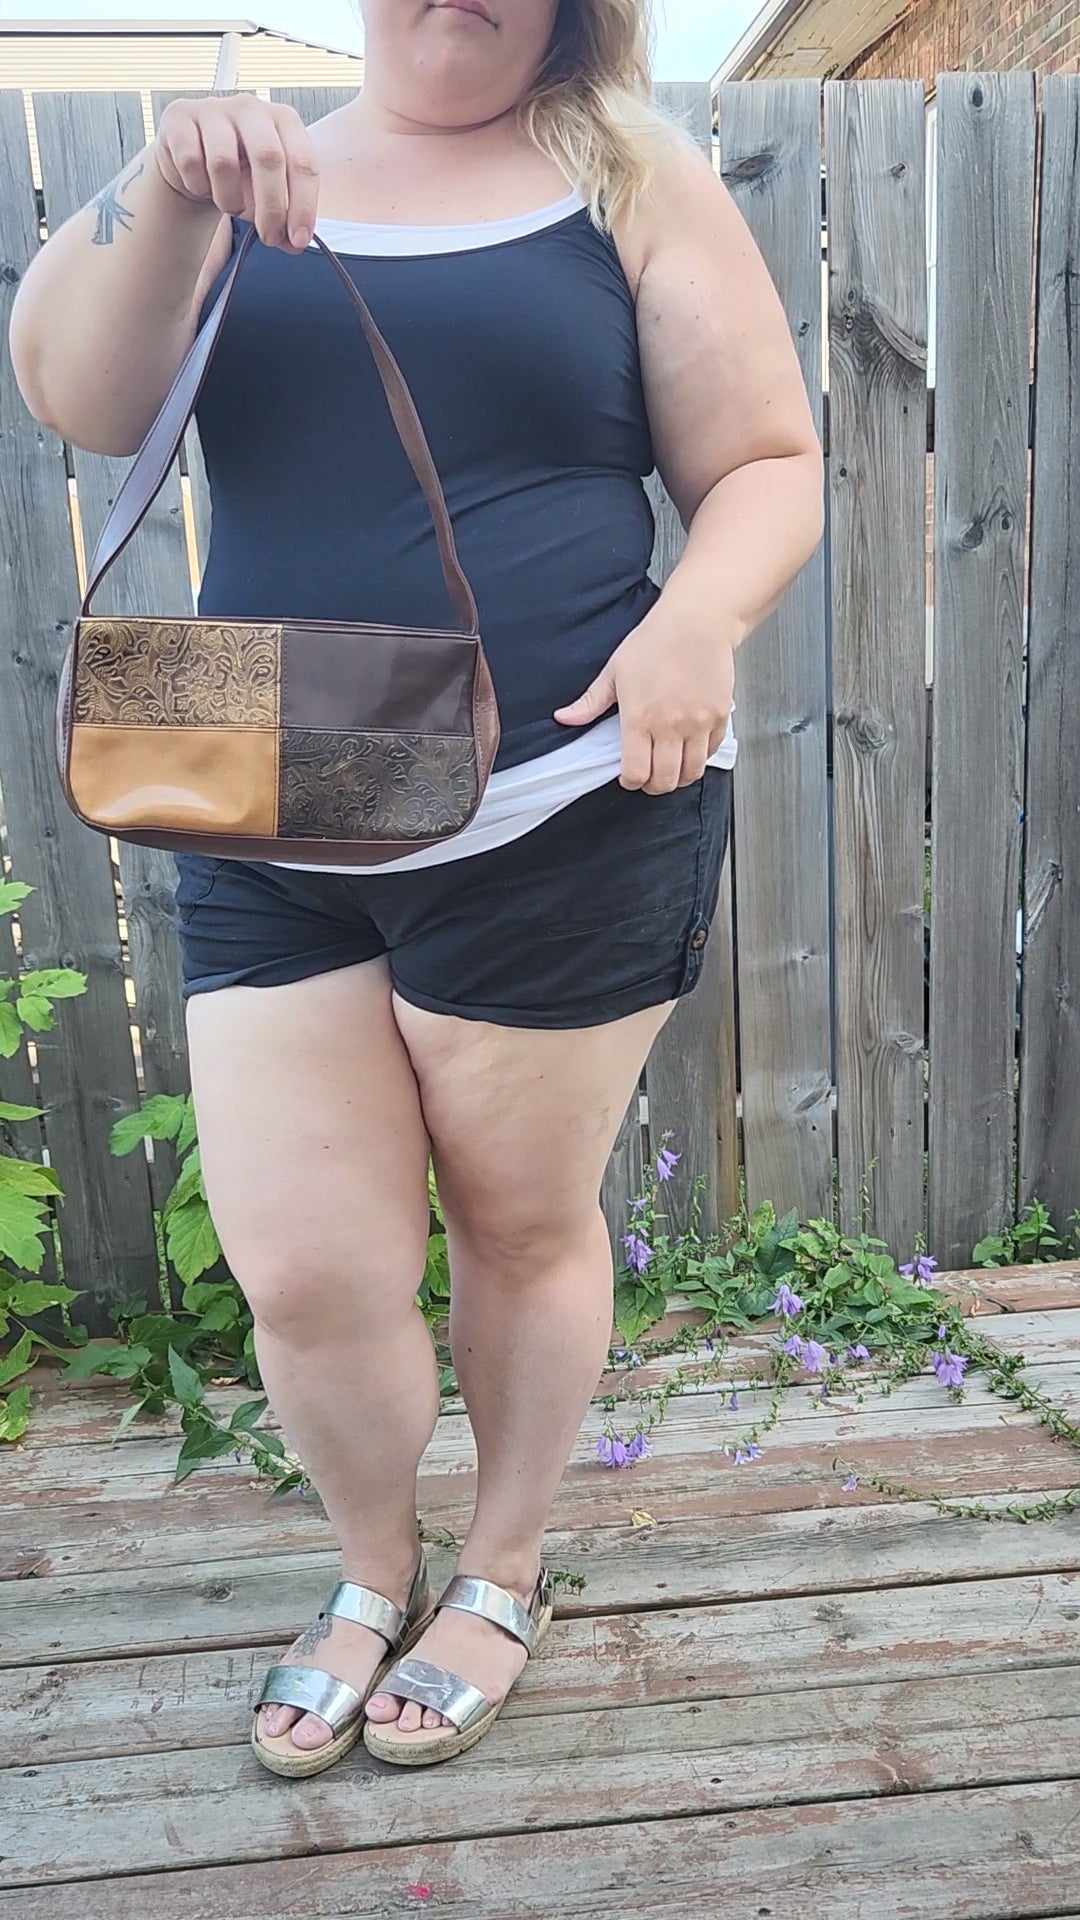 Multi tonal Brown textured vegan leather mini purse